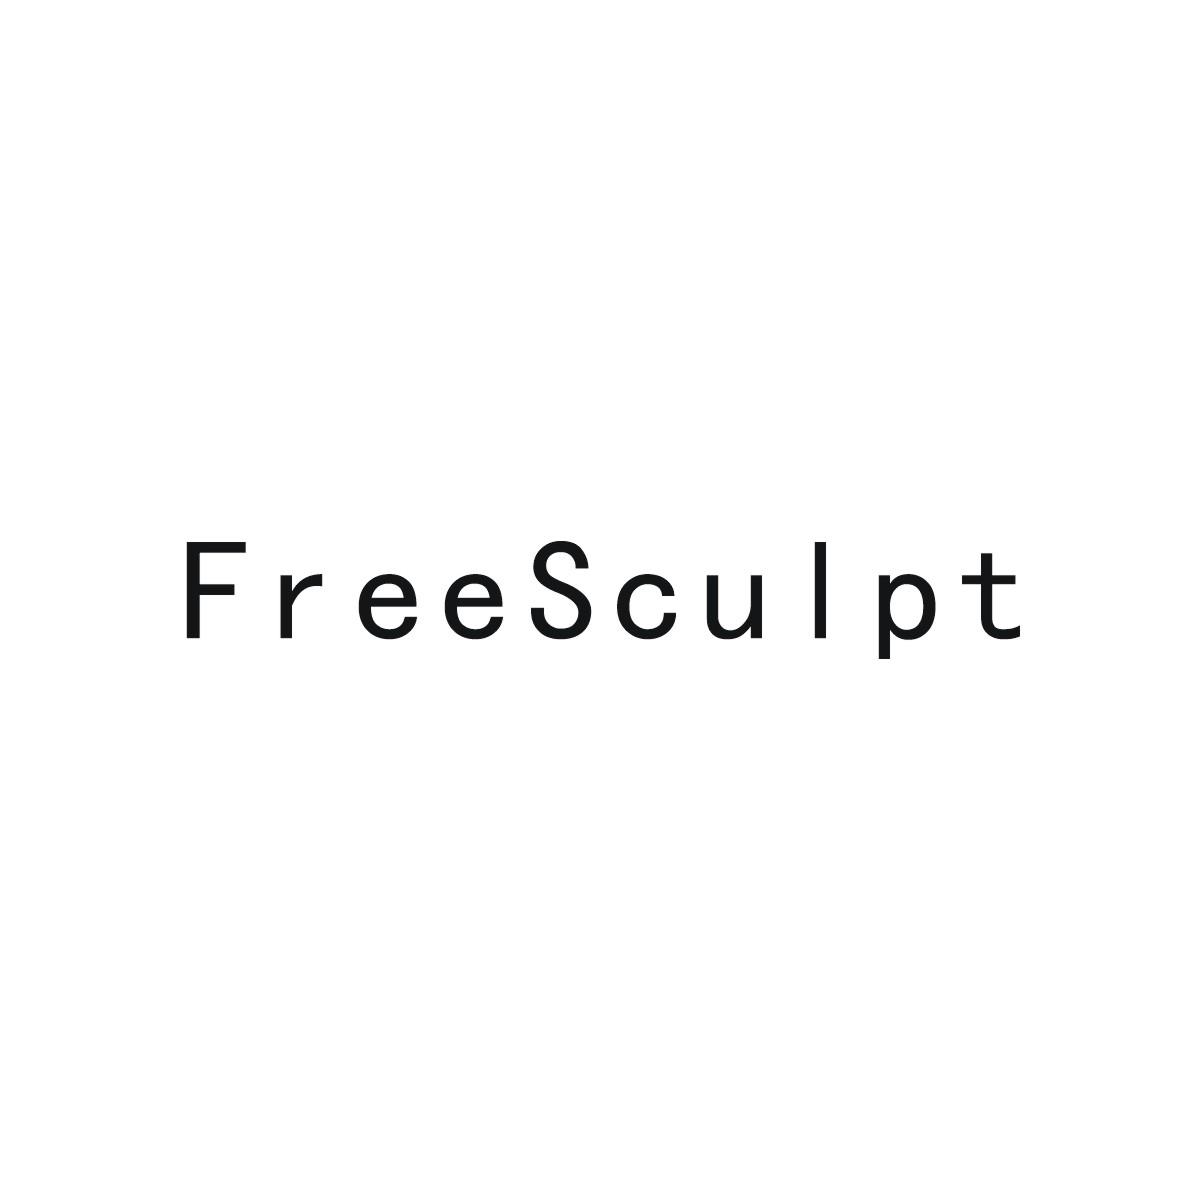 FREESCULPT压片机商标转让费用买卖交易流程